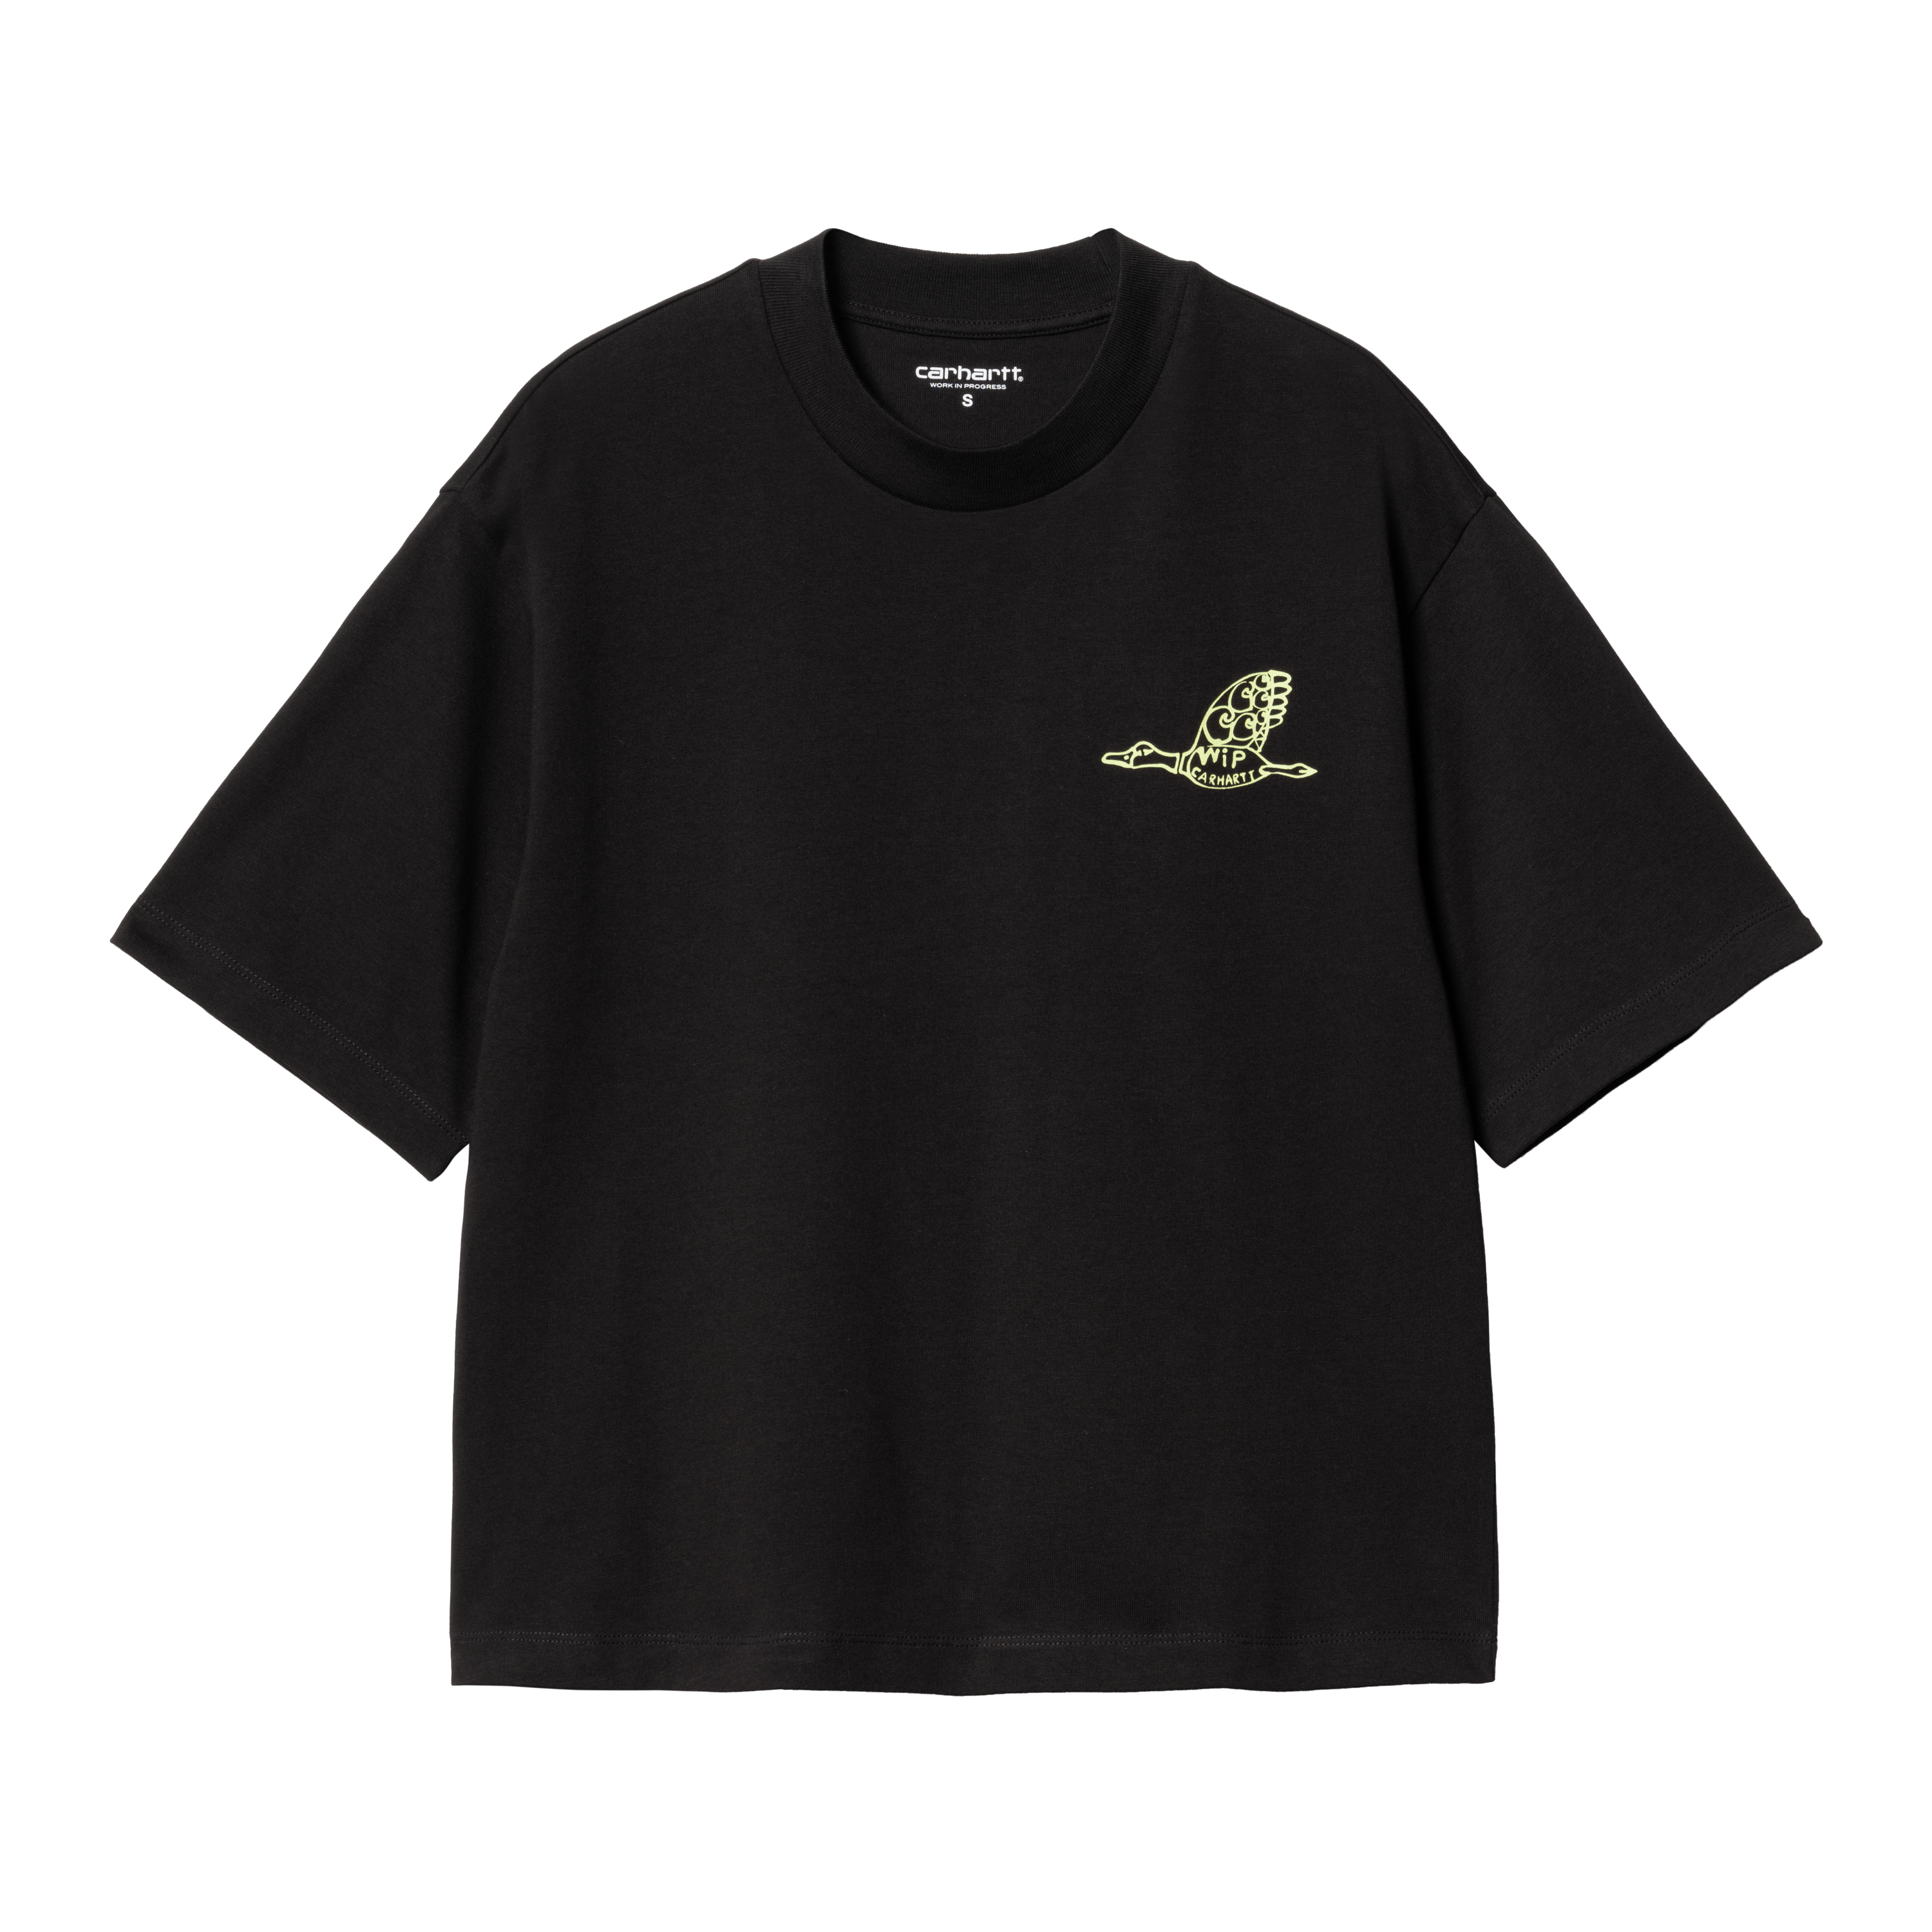 Carhartt WIP Women’s Short Sleeve Kainosho T-Shirt in Schwarz